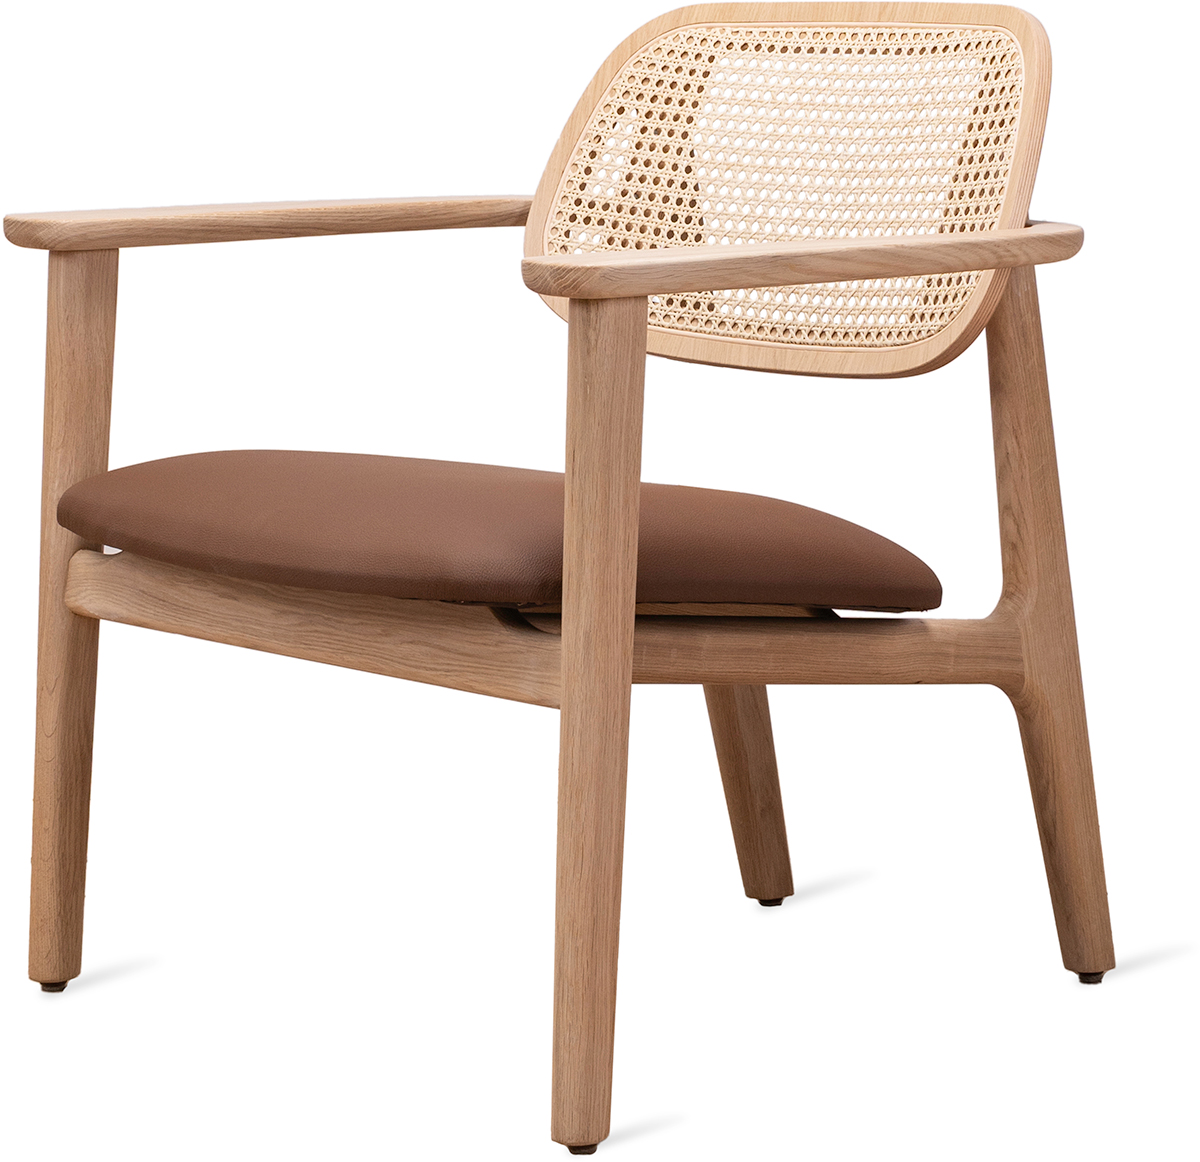 Vincent Sheppard Titus Lounge Chair Natural Oak Varnish/Padded Seat Chestnut